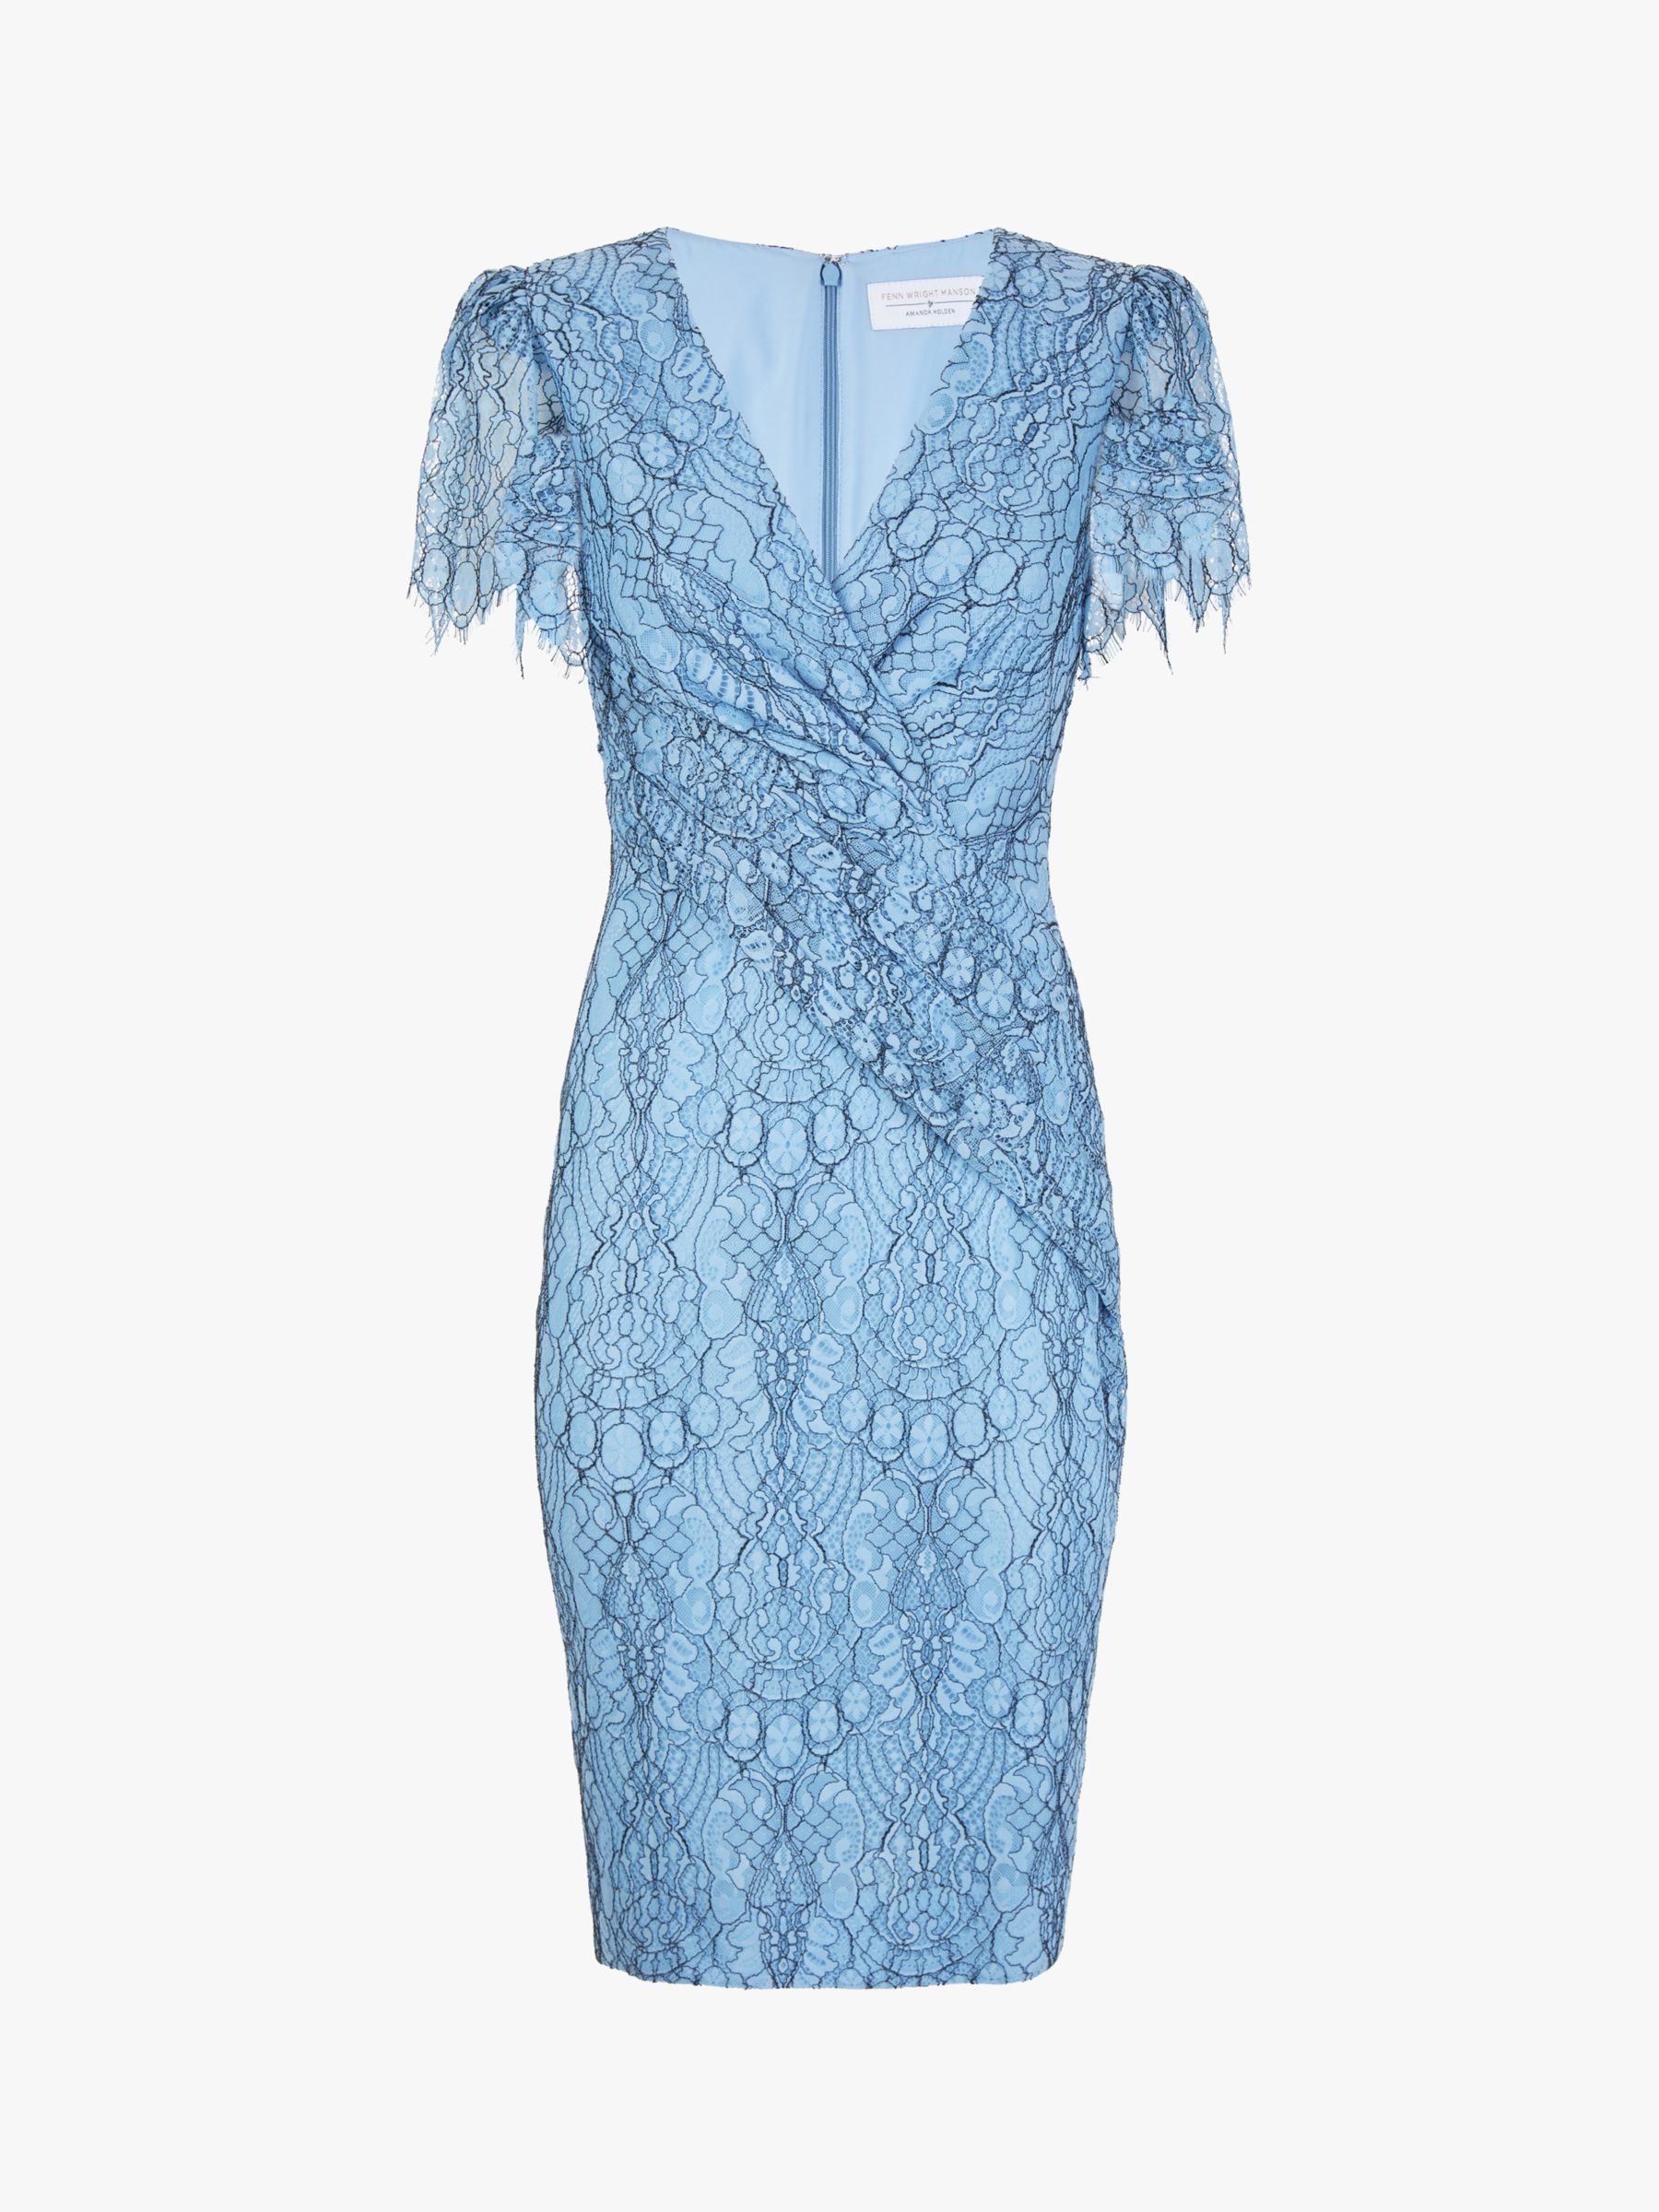 Fenn Wright Manson Amanda Holden Collection Kate Floral Dress, Pale Blue